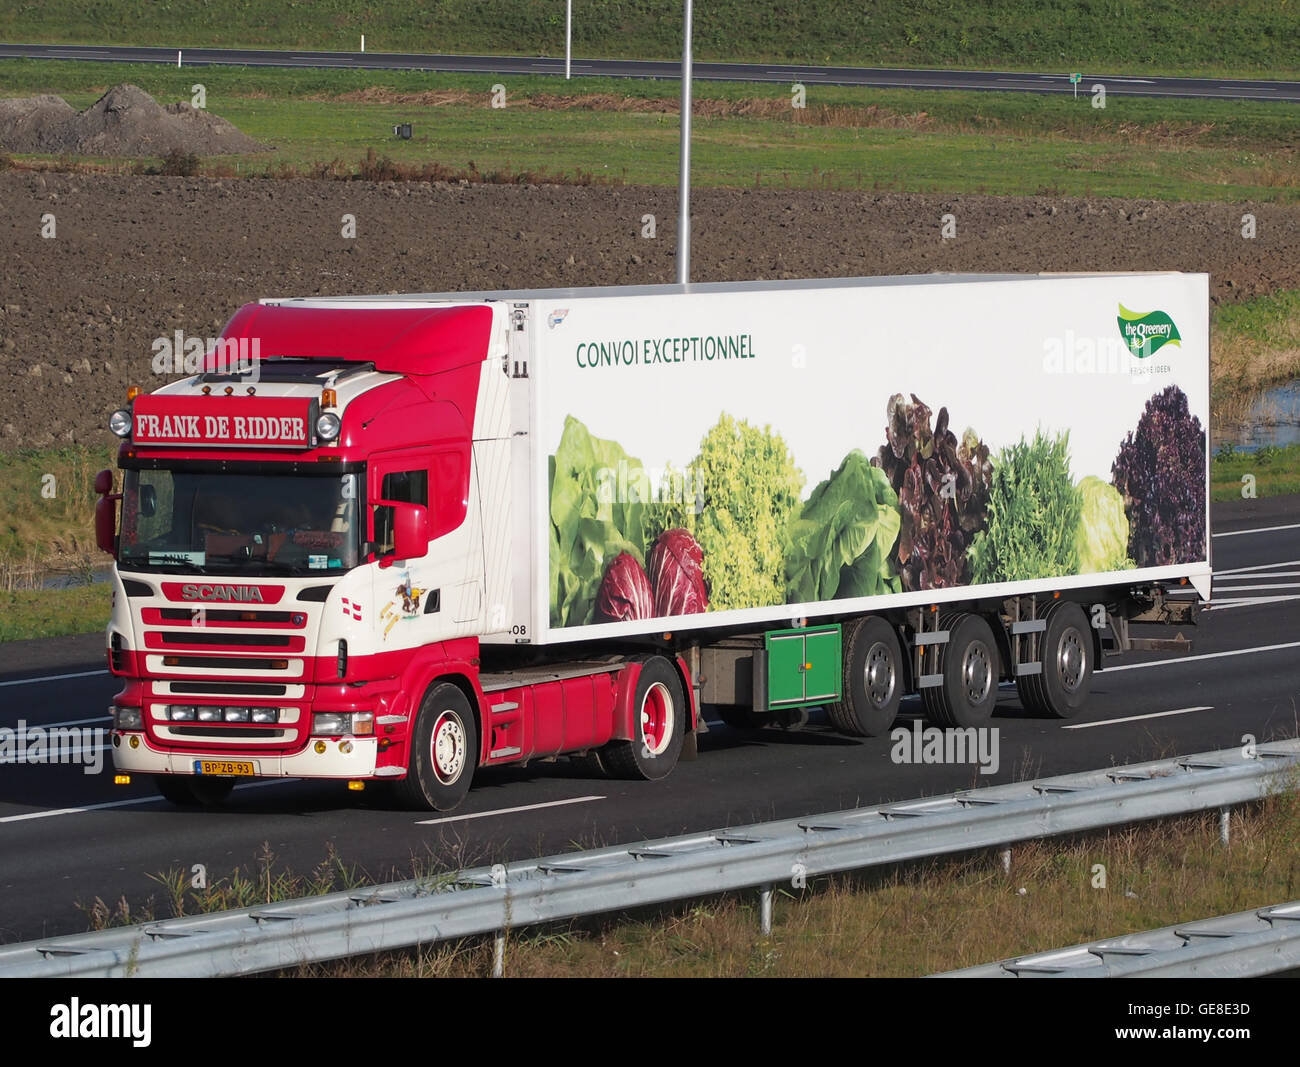 Scania, Frank de Ridder, The Greenery Stock Photo